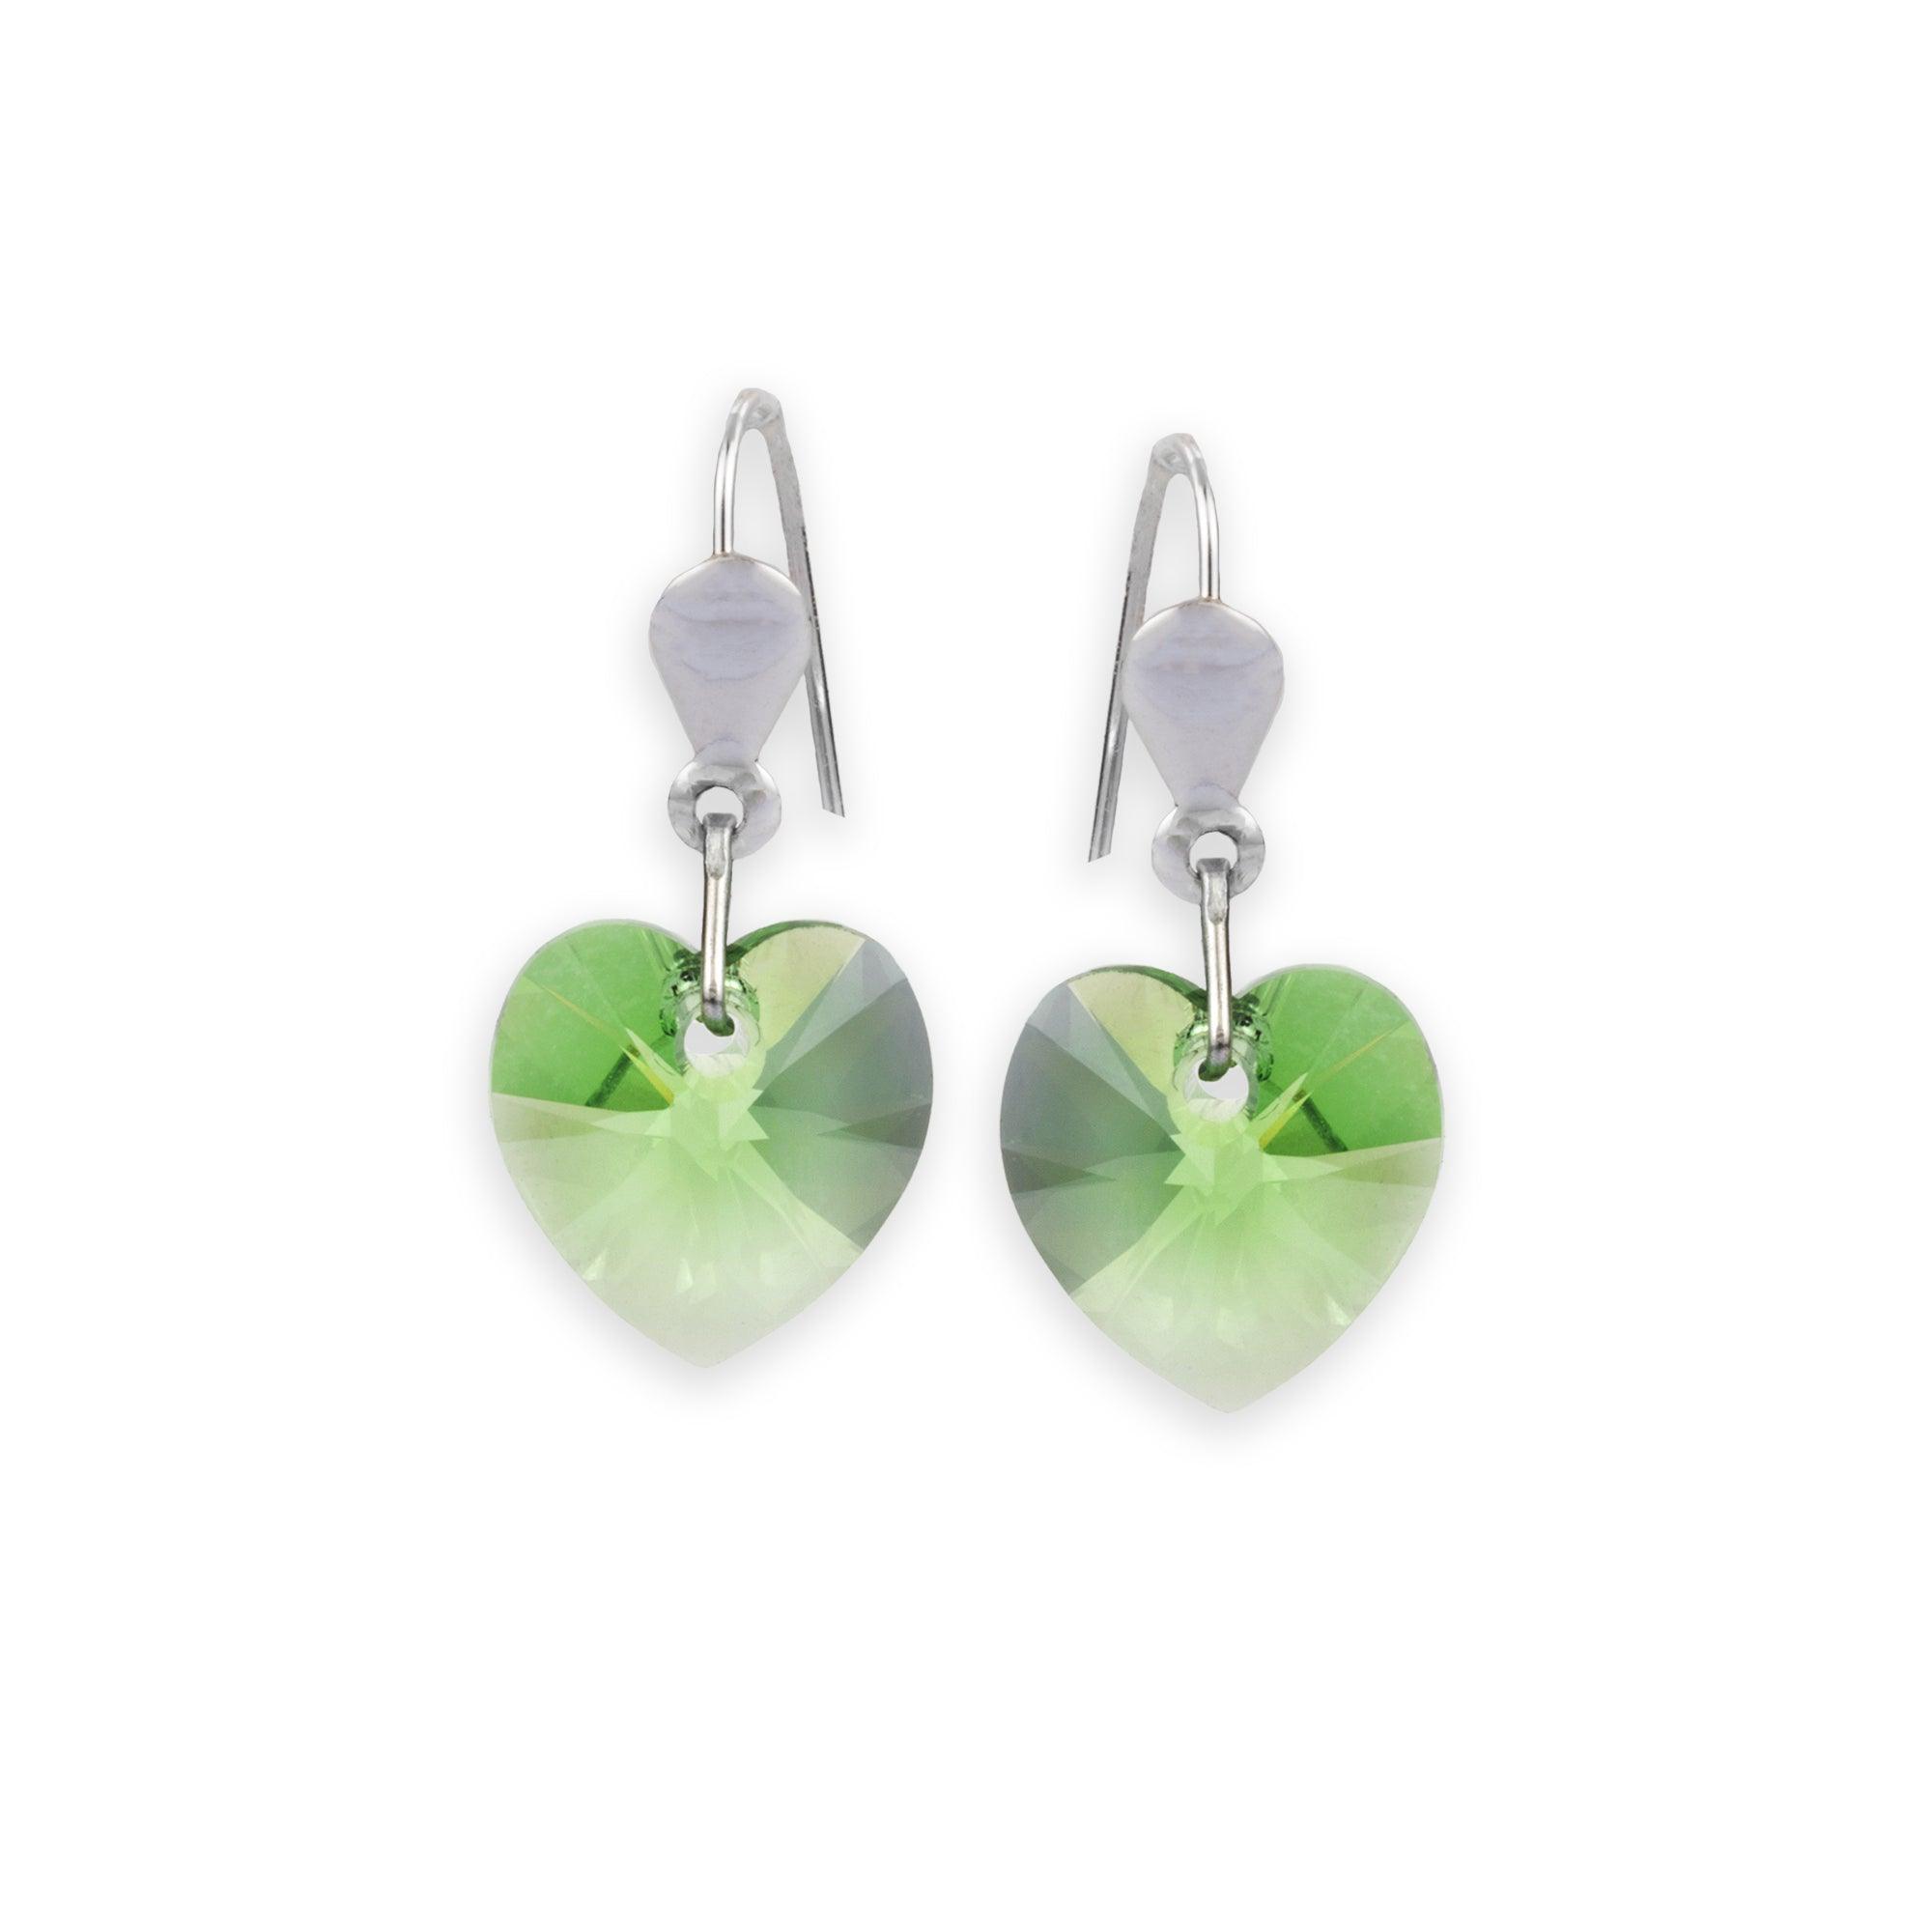 Sterling Silver Heart Shaped Drop Earrings with Green Austrian Crystal BP9663 - Minar Jewellers